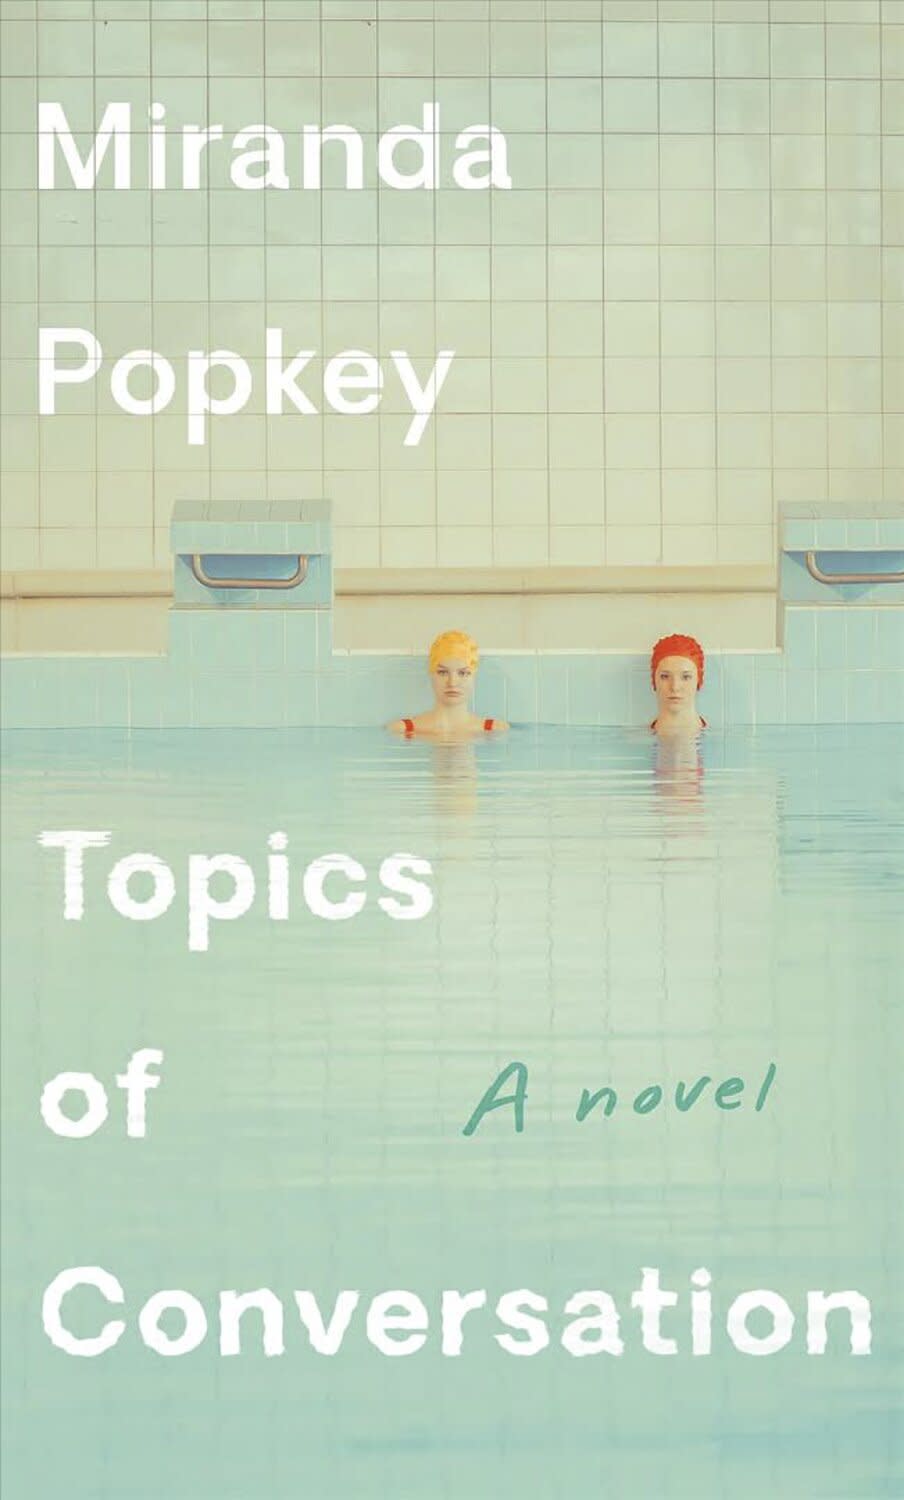 Topics of Conversation by Miranda Popkey